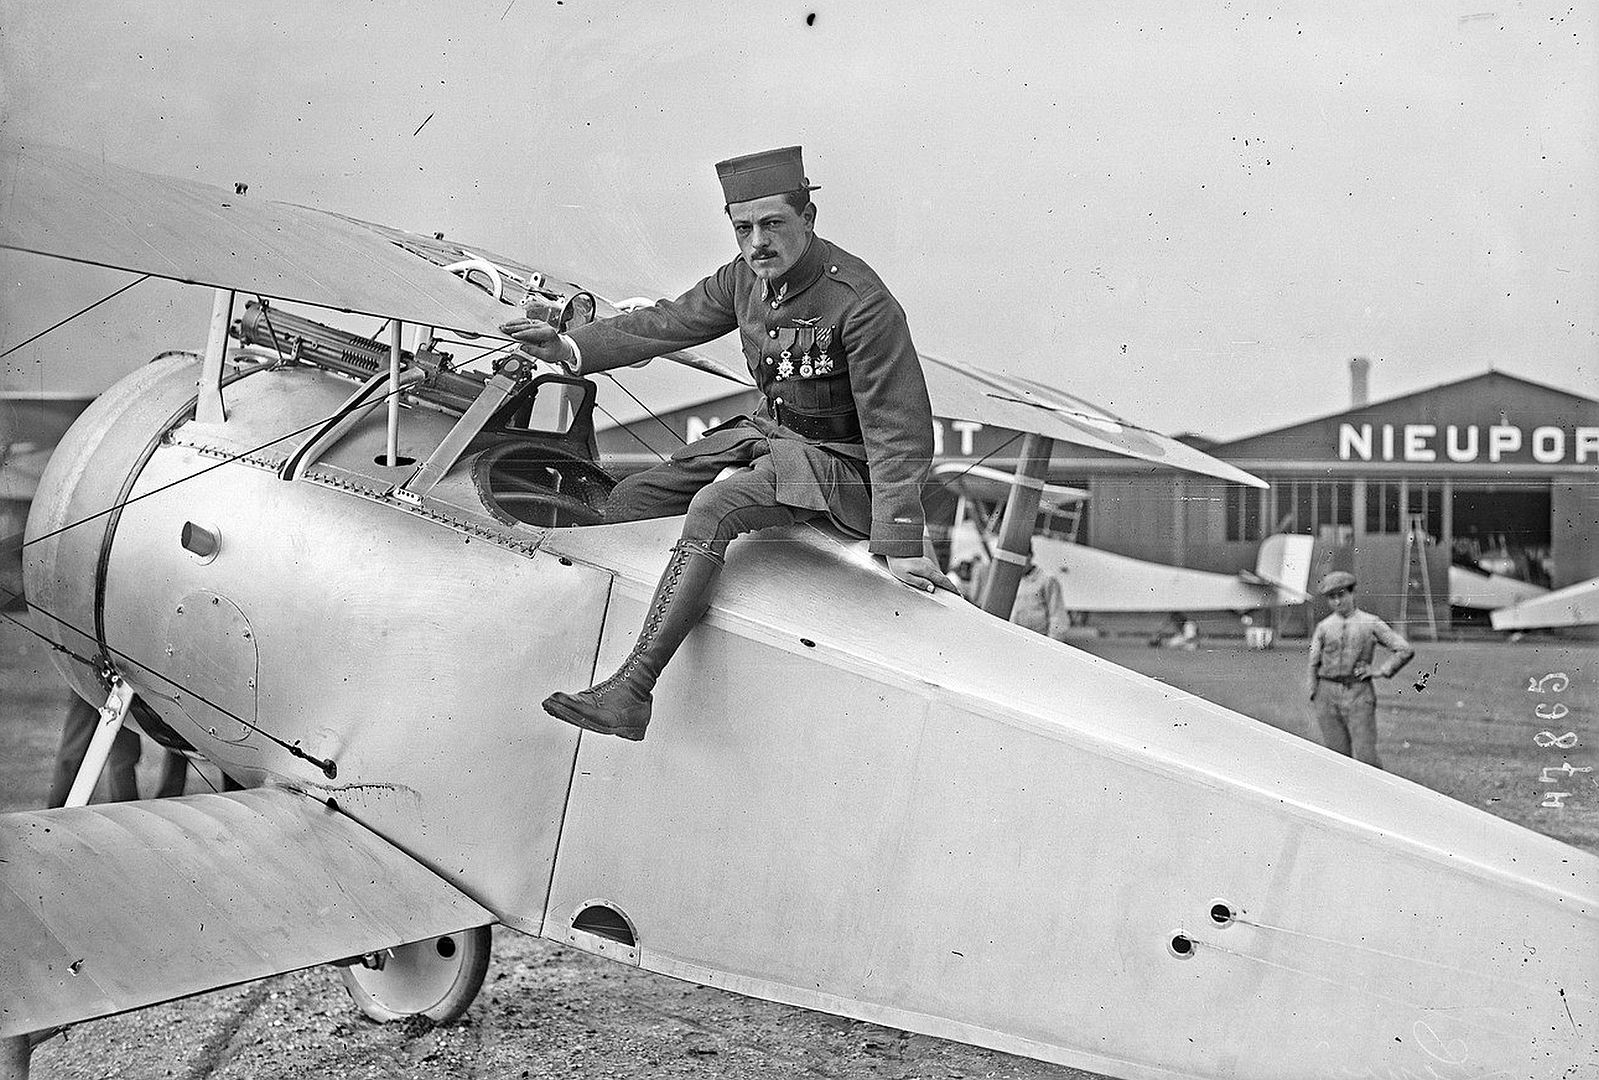 Lenoir Aviator Of Squadron N 23 In Front Of Nieuport Hangars